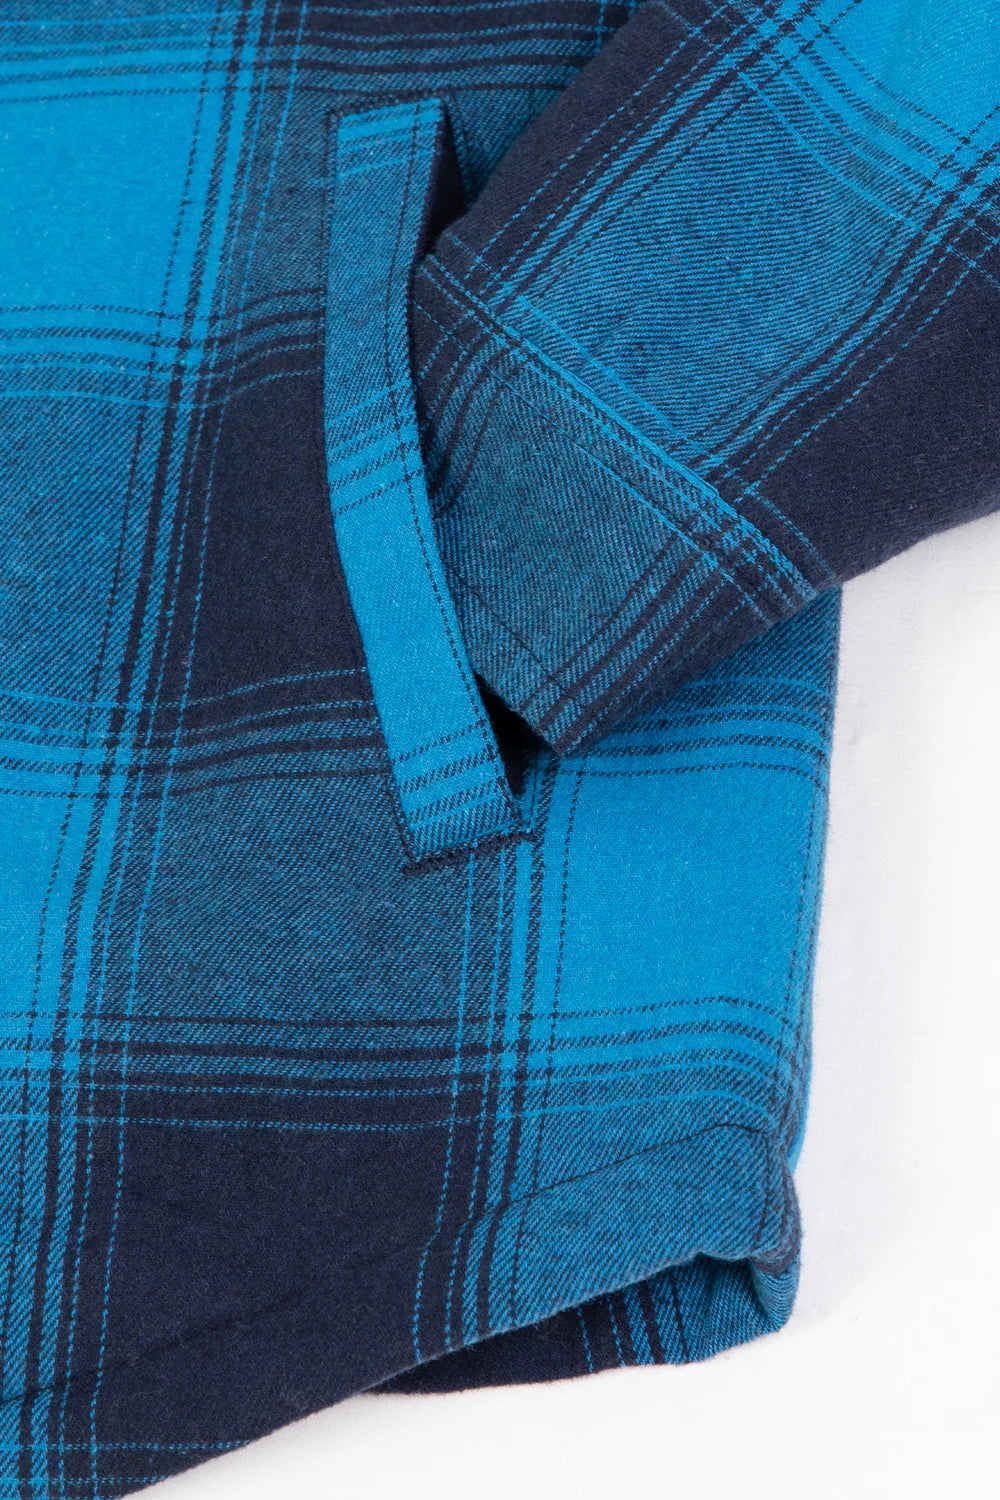 Sherpa-lined shacket pocket